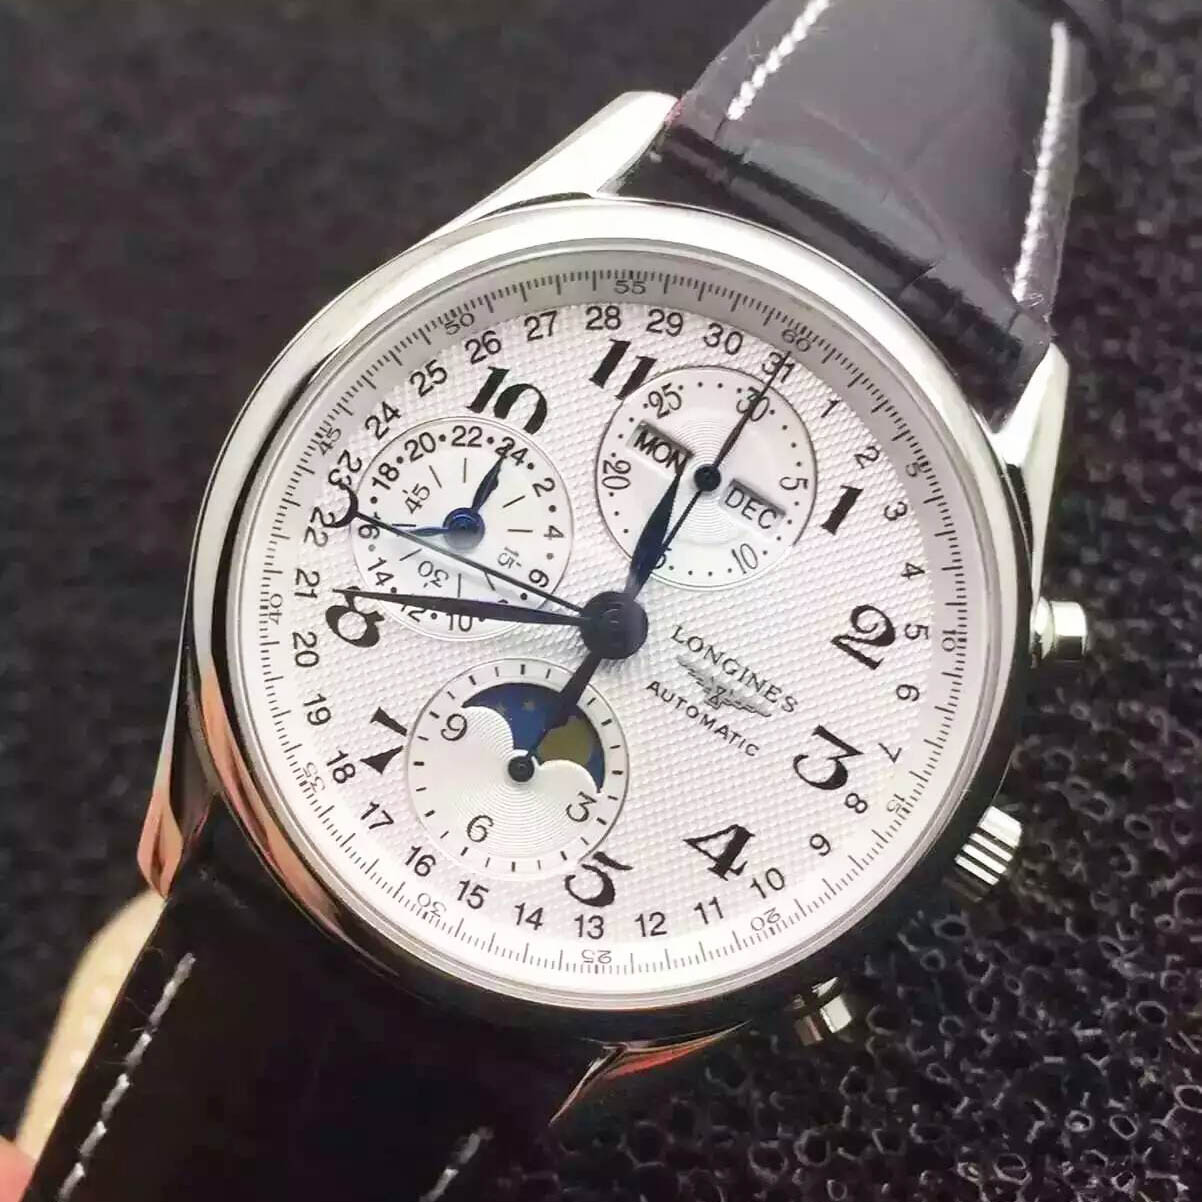 3A浪琴 Longines 月相腕錶巴塞爾錶展熱款搭載7750自動上鏈機芯